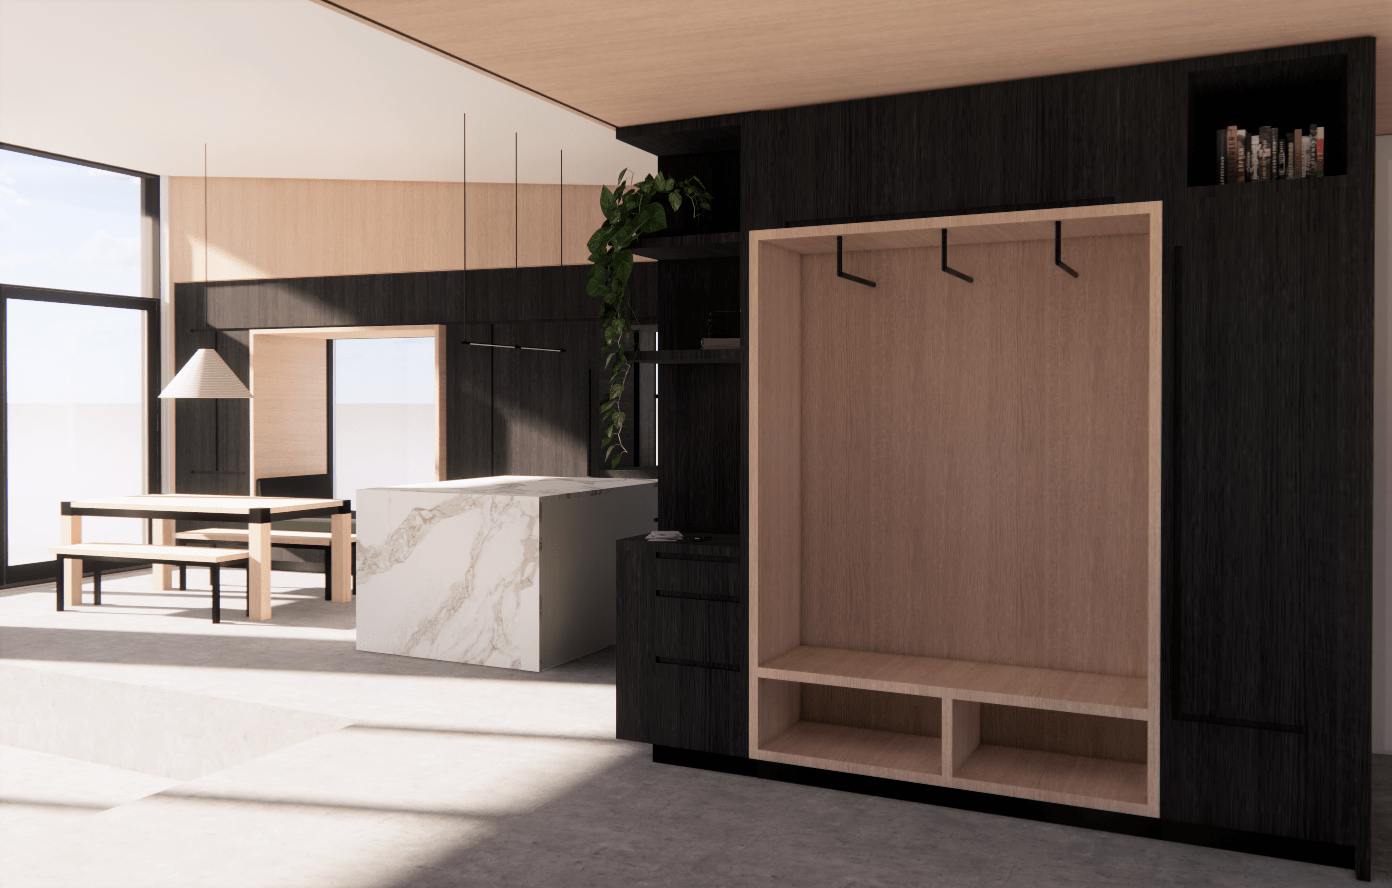 Interior design rendering of new build light industrial residential modern home